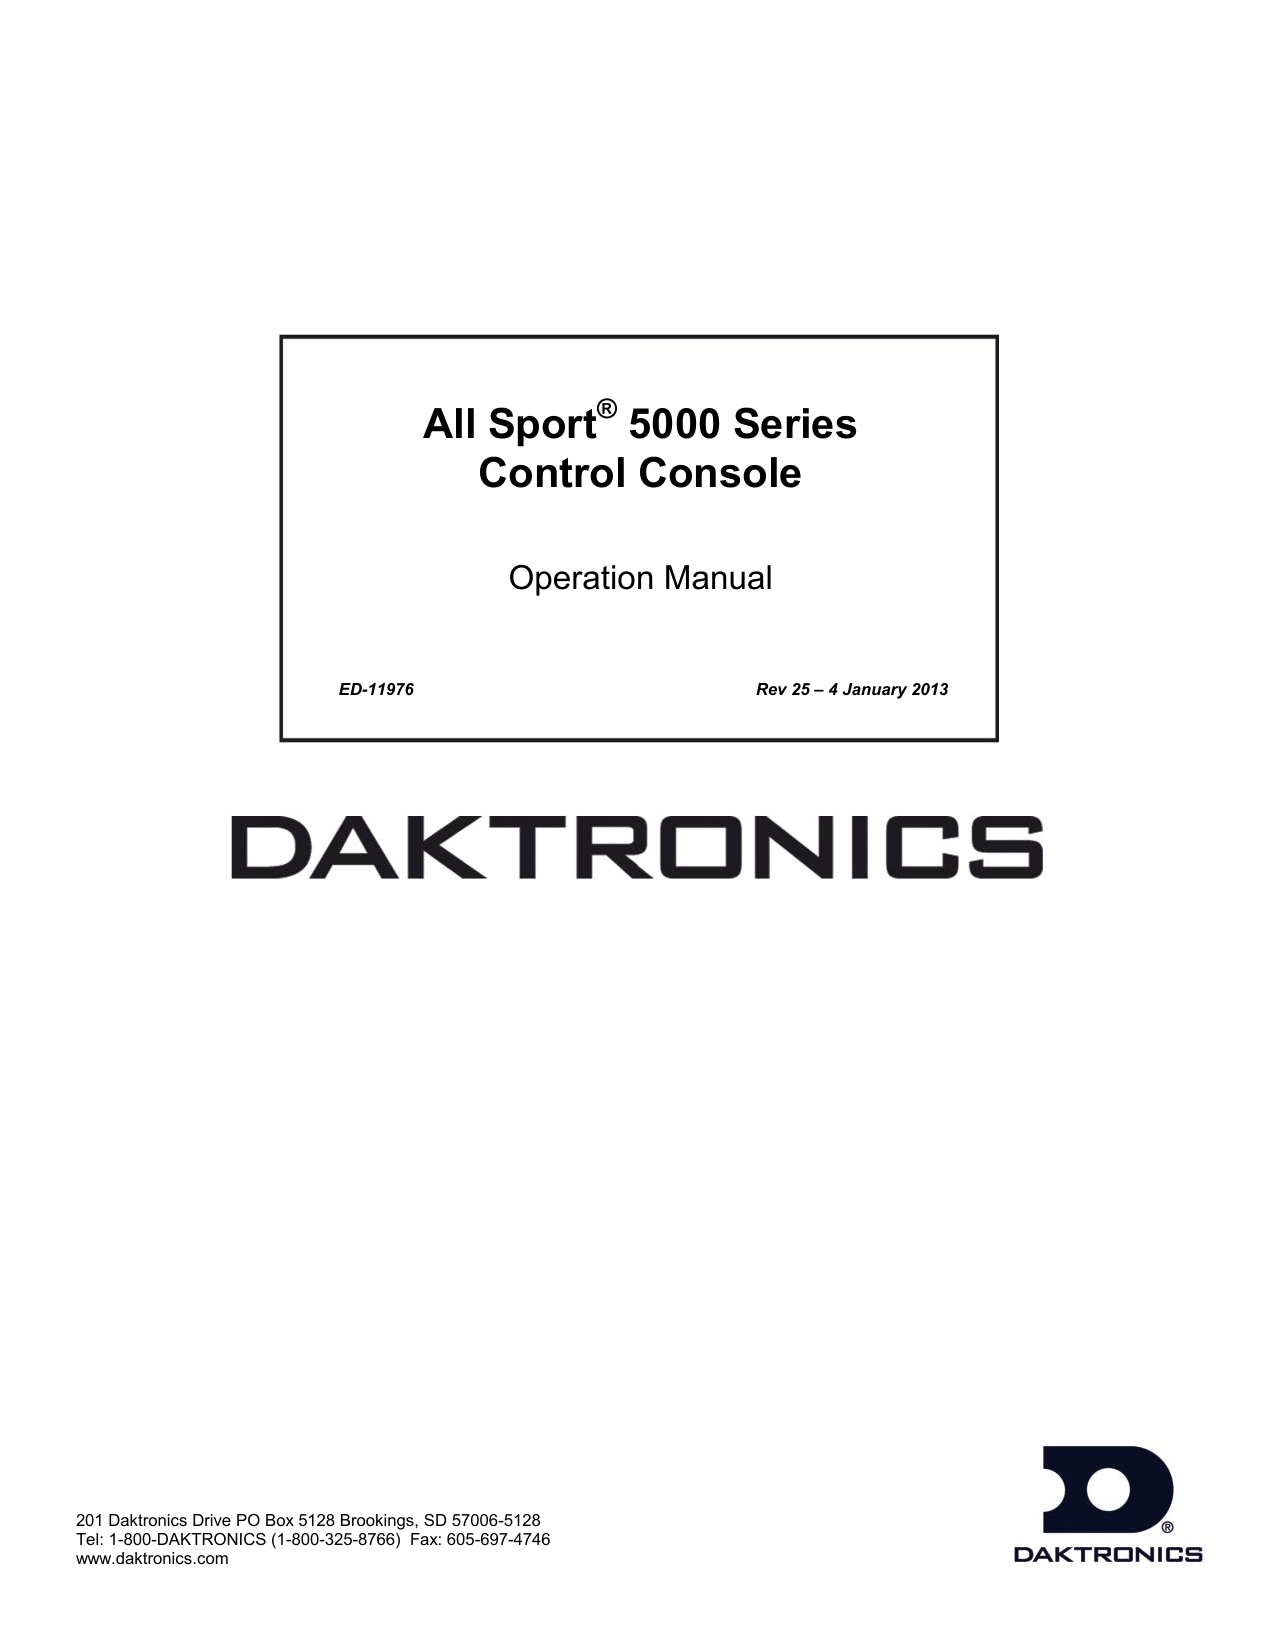 Brand New Daktronics All Sport 5000 Series Scoreboard Controller AS 5010 